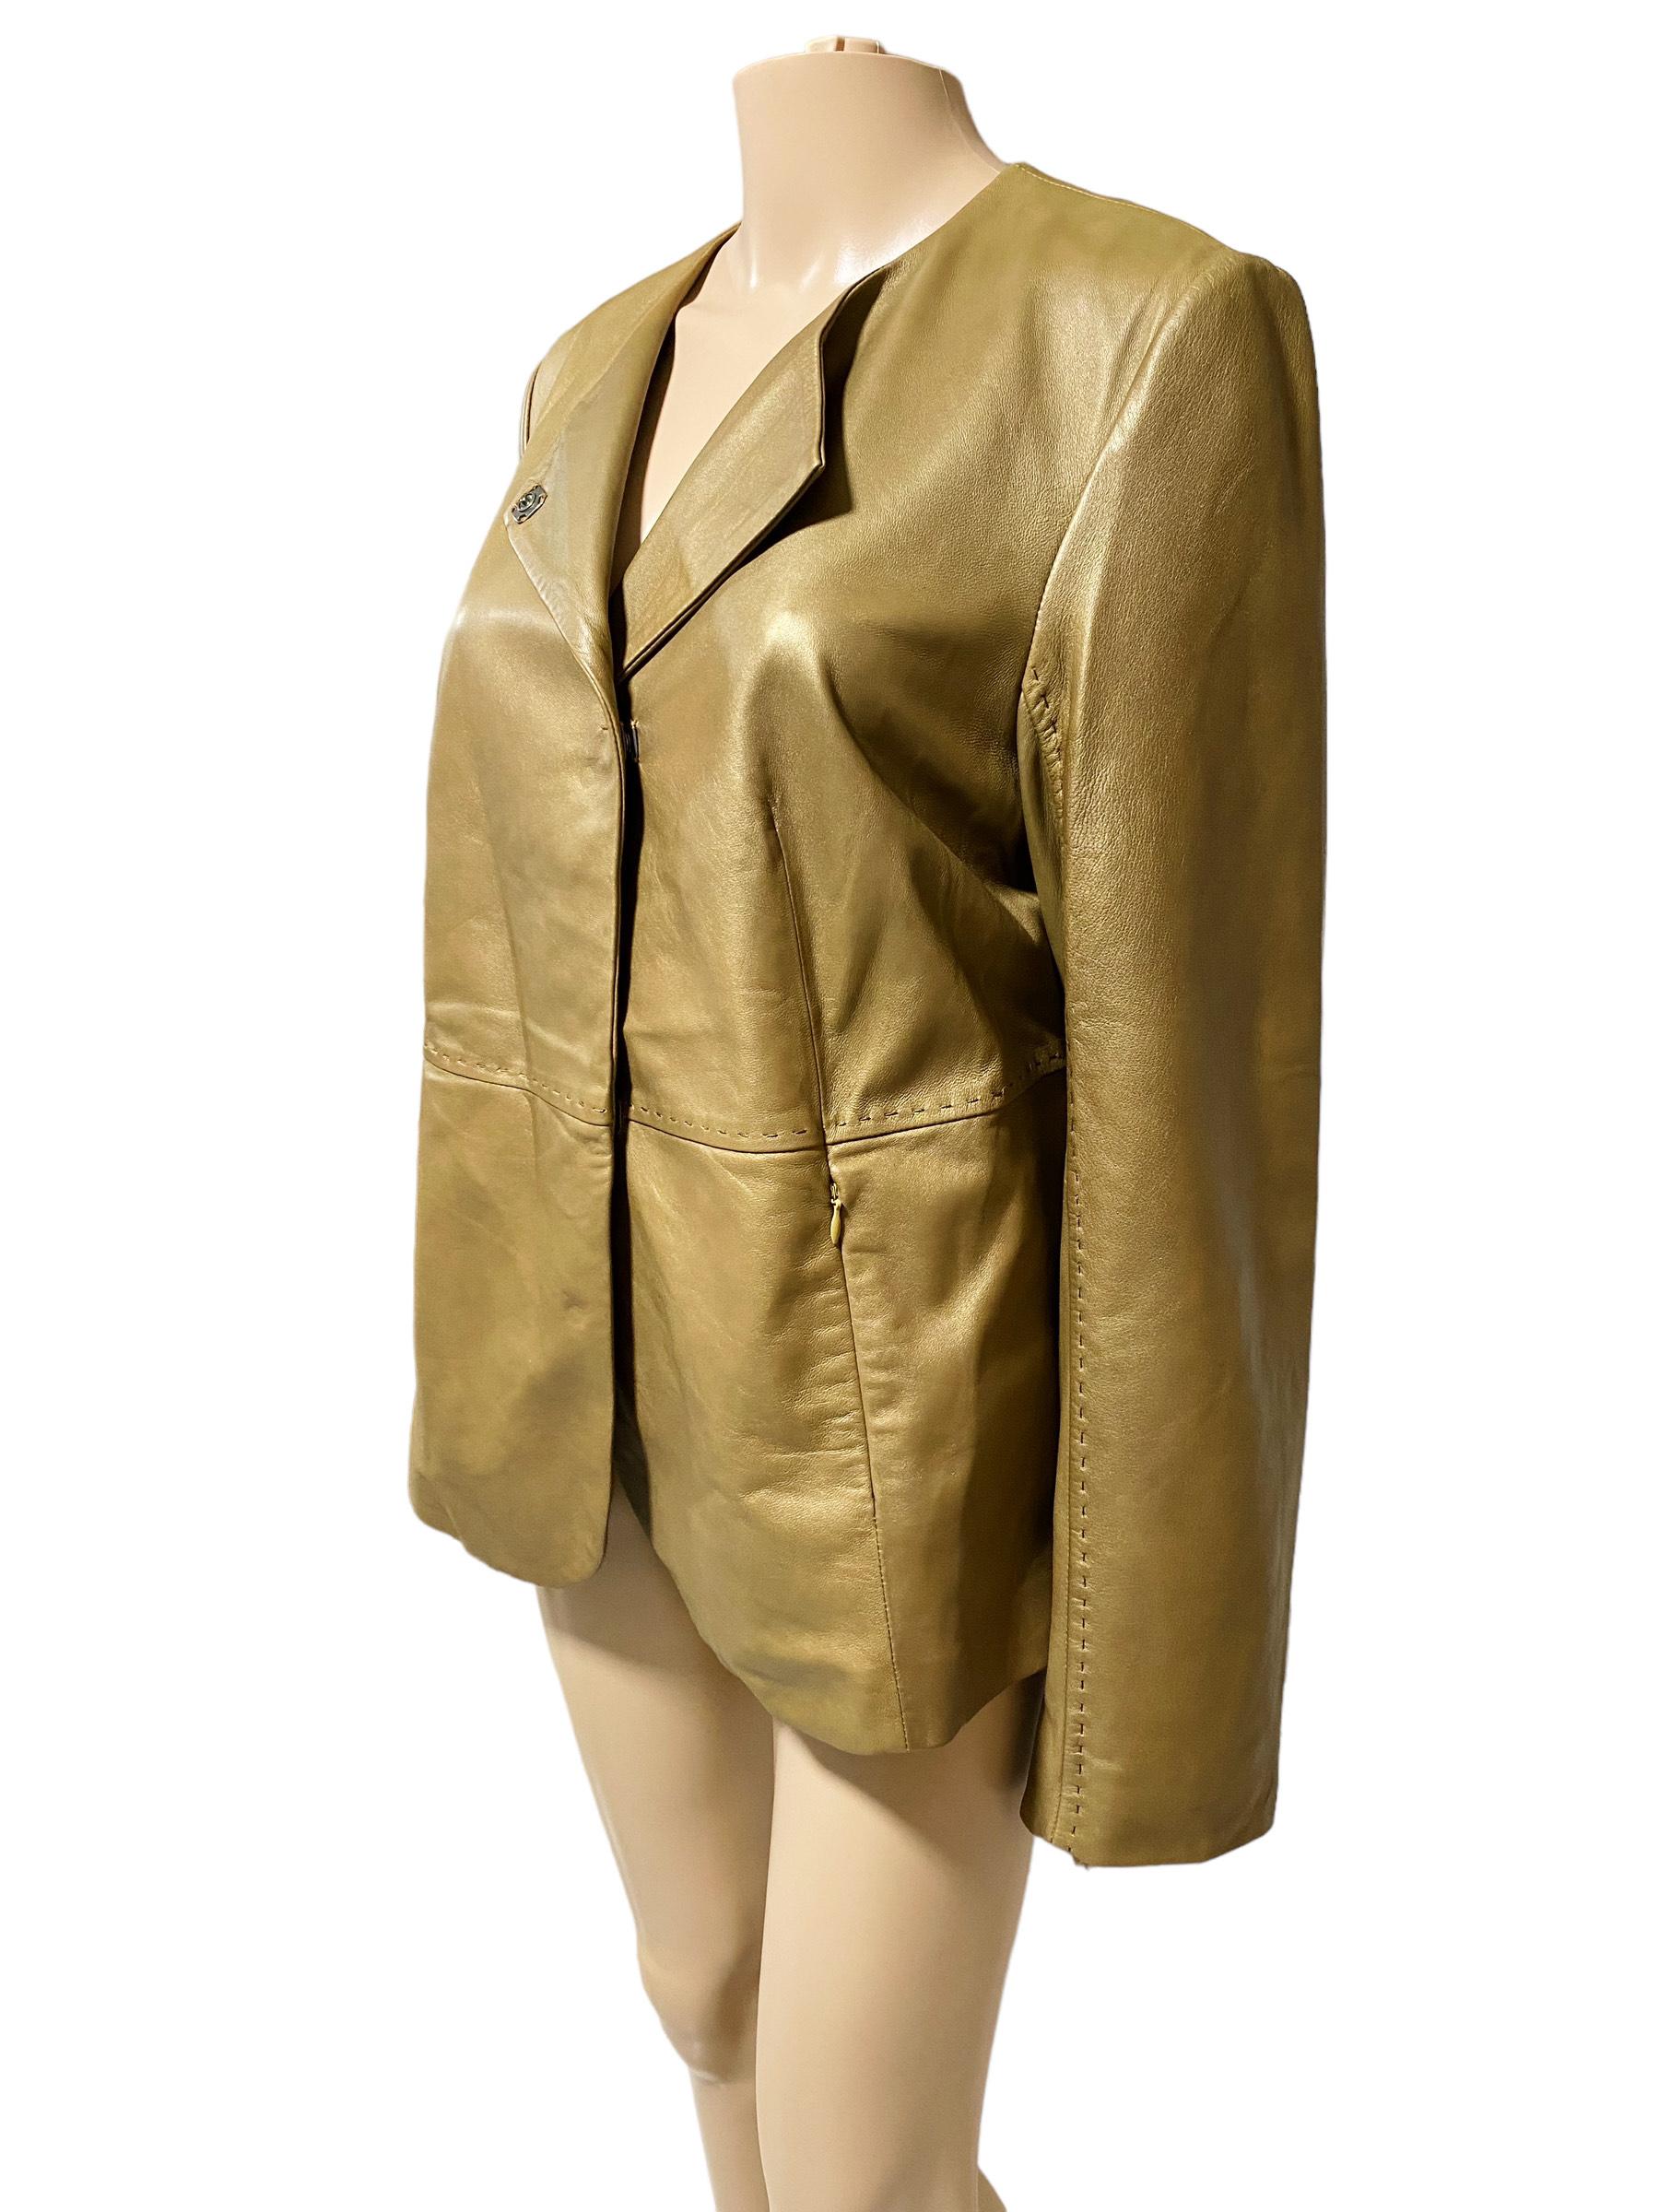 Women's or Men's Marina Rinaldi x Max Mara Genuine Leather Jacket - Limited Edition For Sale